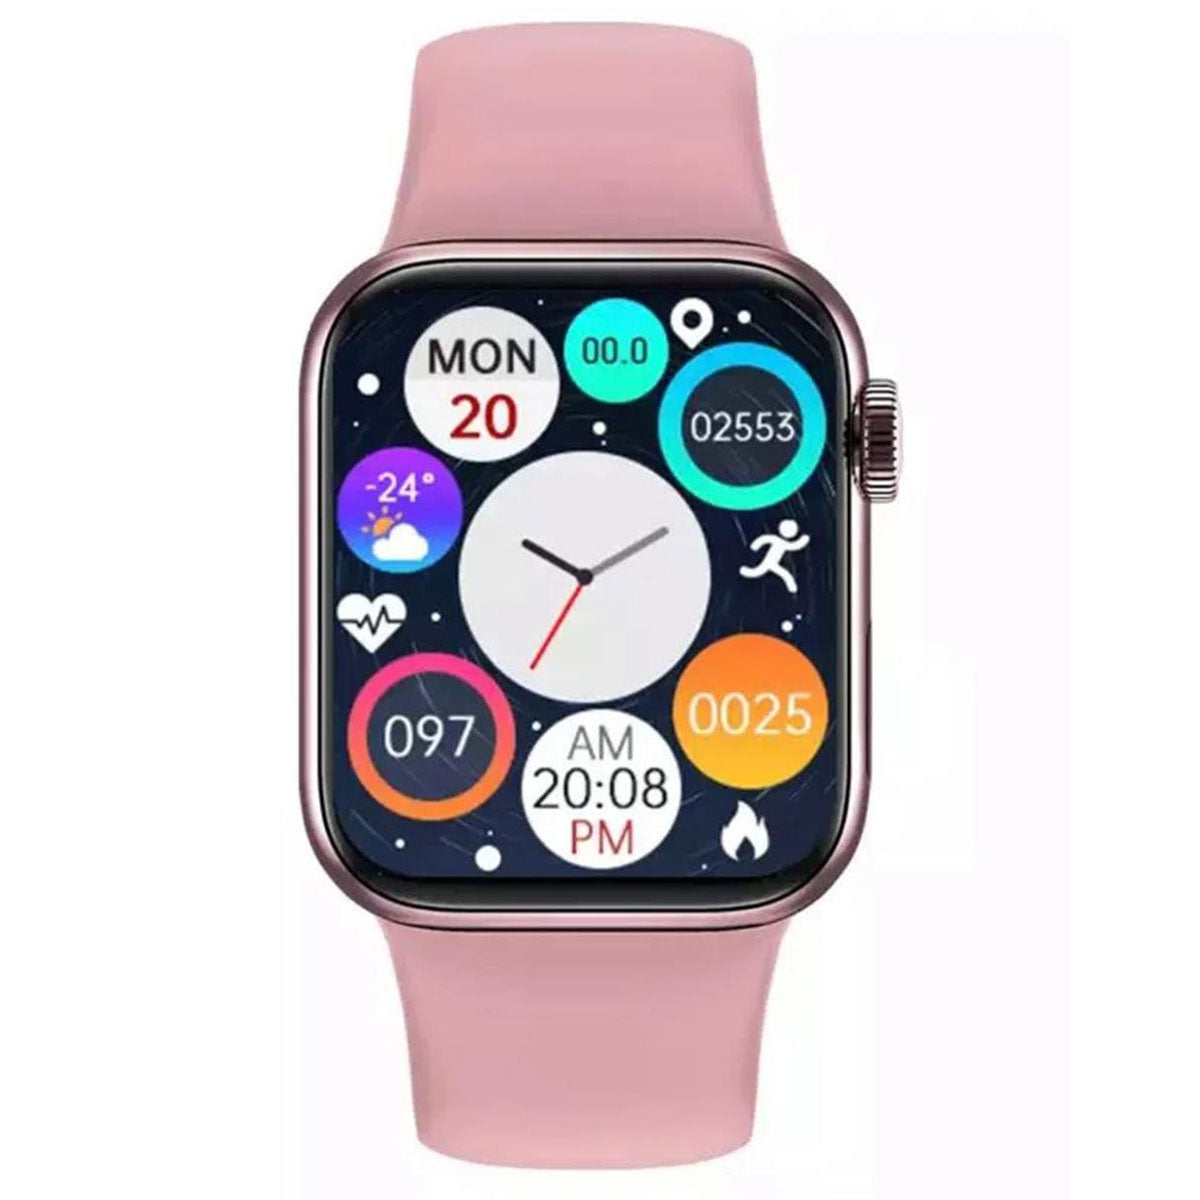 Smartwatch Reloj Inteligente N76 Serie 7 Full Touch Fralugio